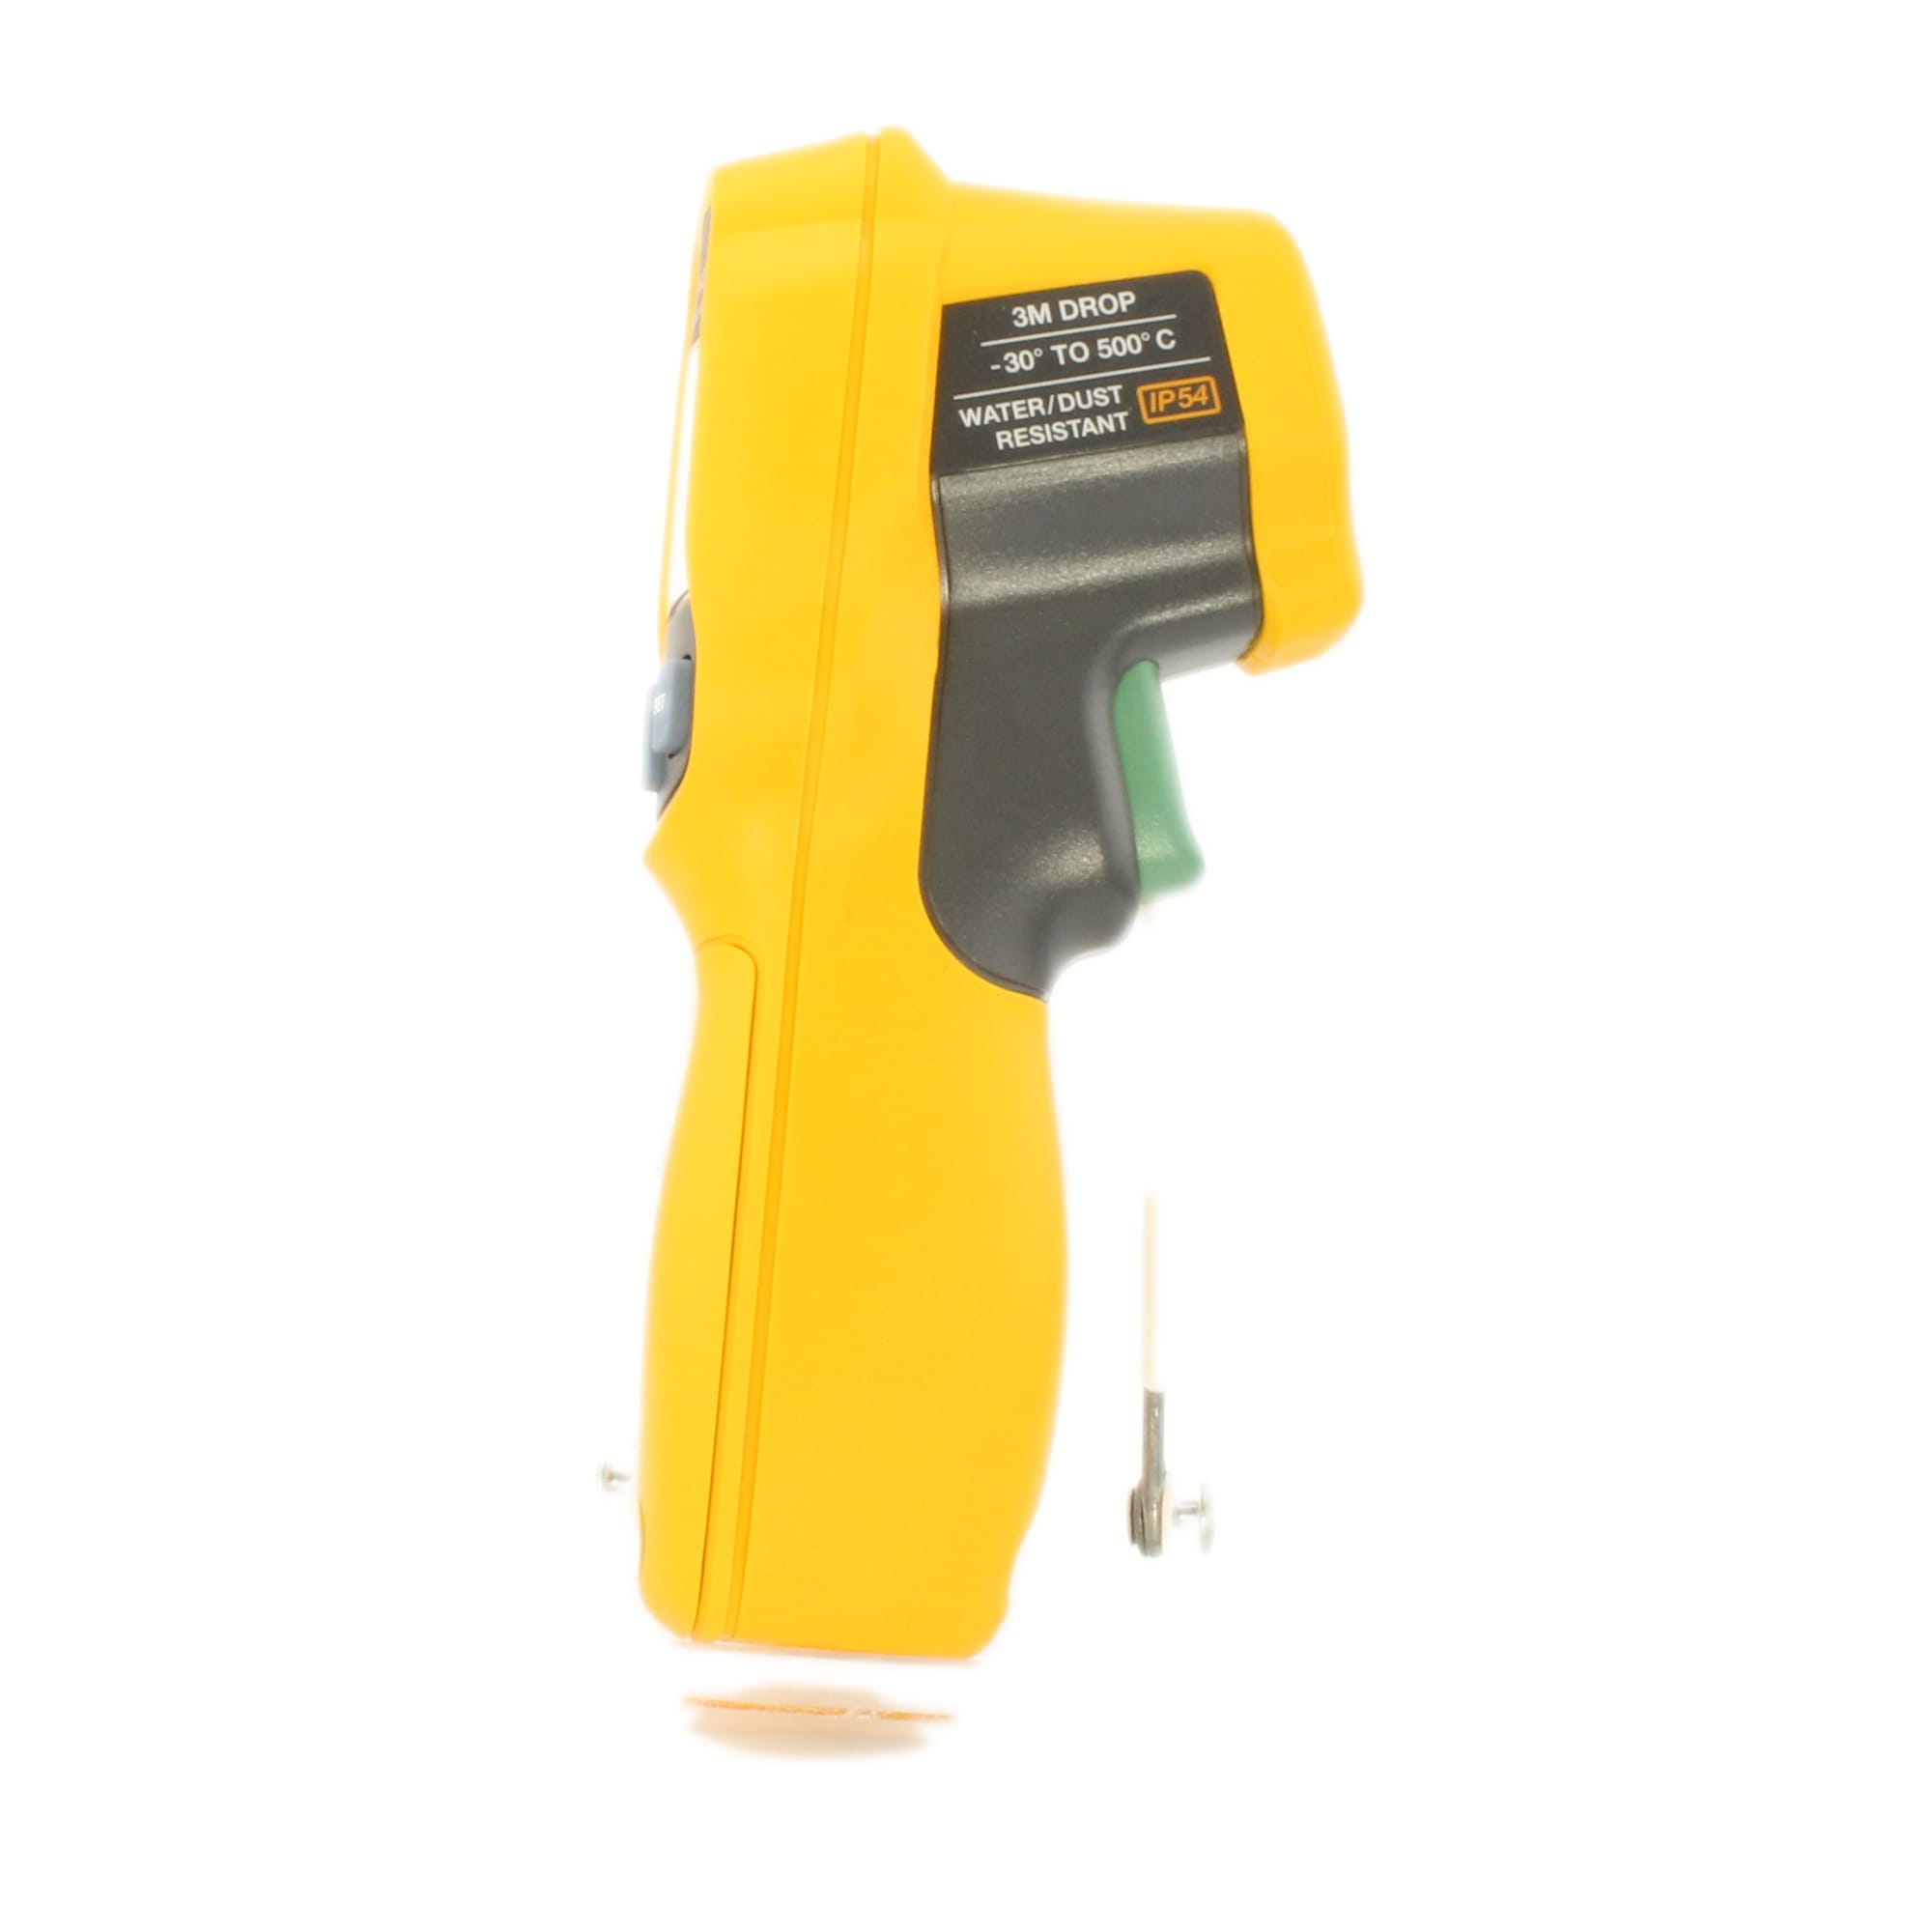 Handheld Infrared Thermometer, Fluke 68 Handheld Non-Contact